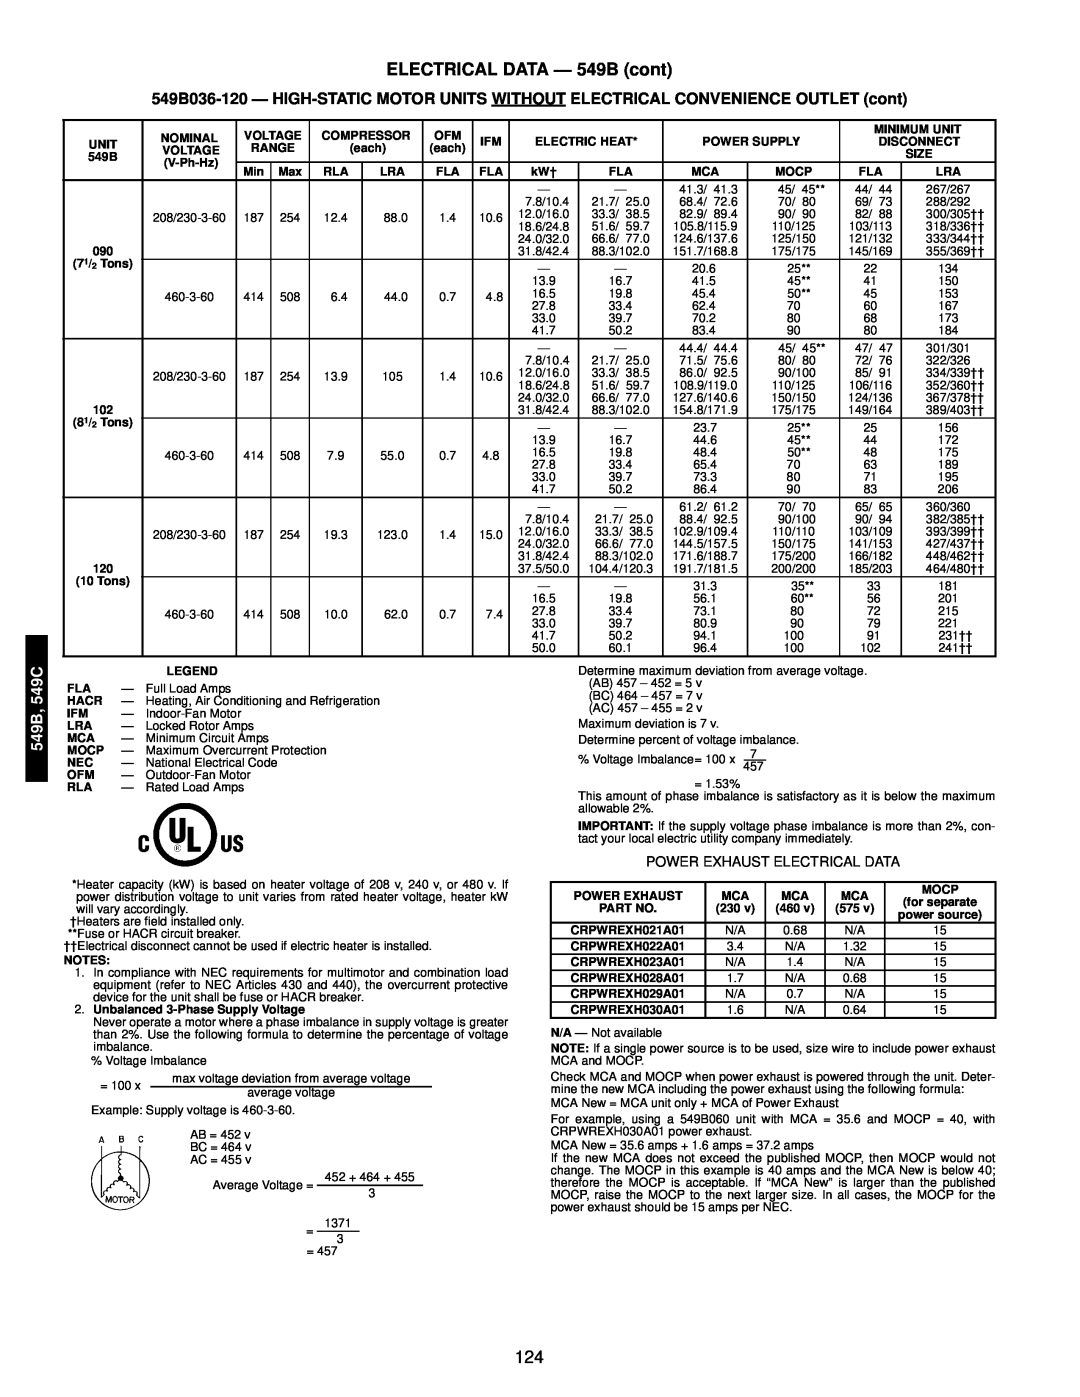 Bryant manual ELECTRICAL DATA - 549B cont, 549B, 549C, 41.3 